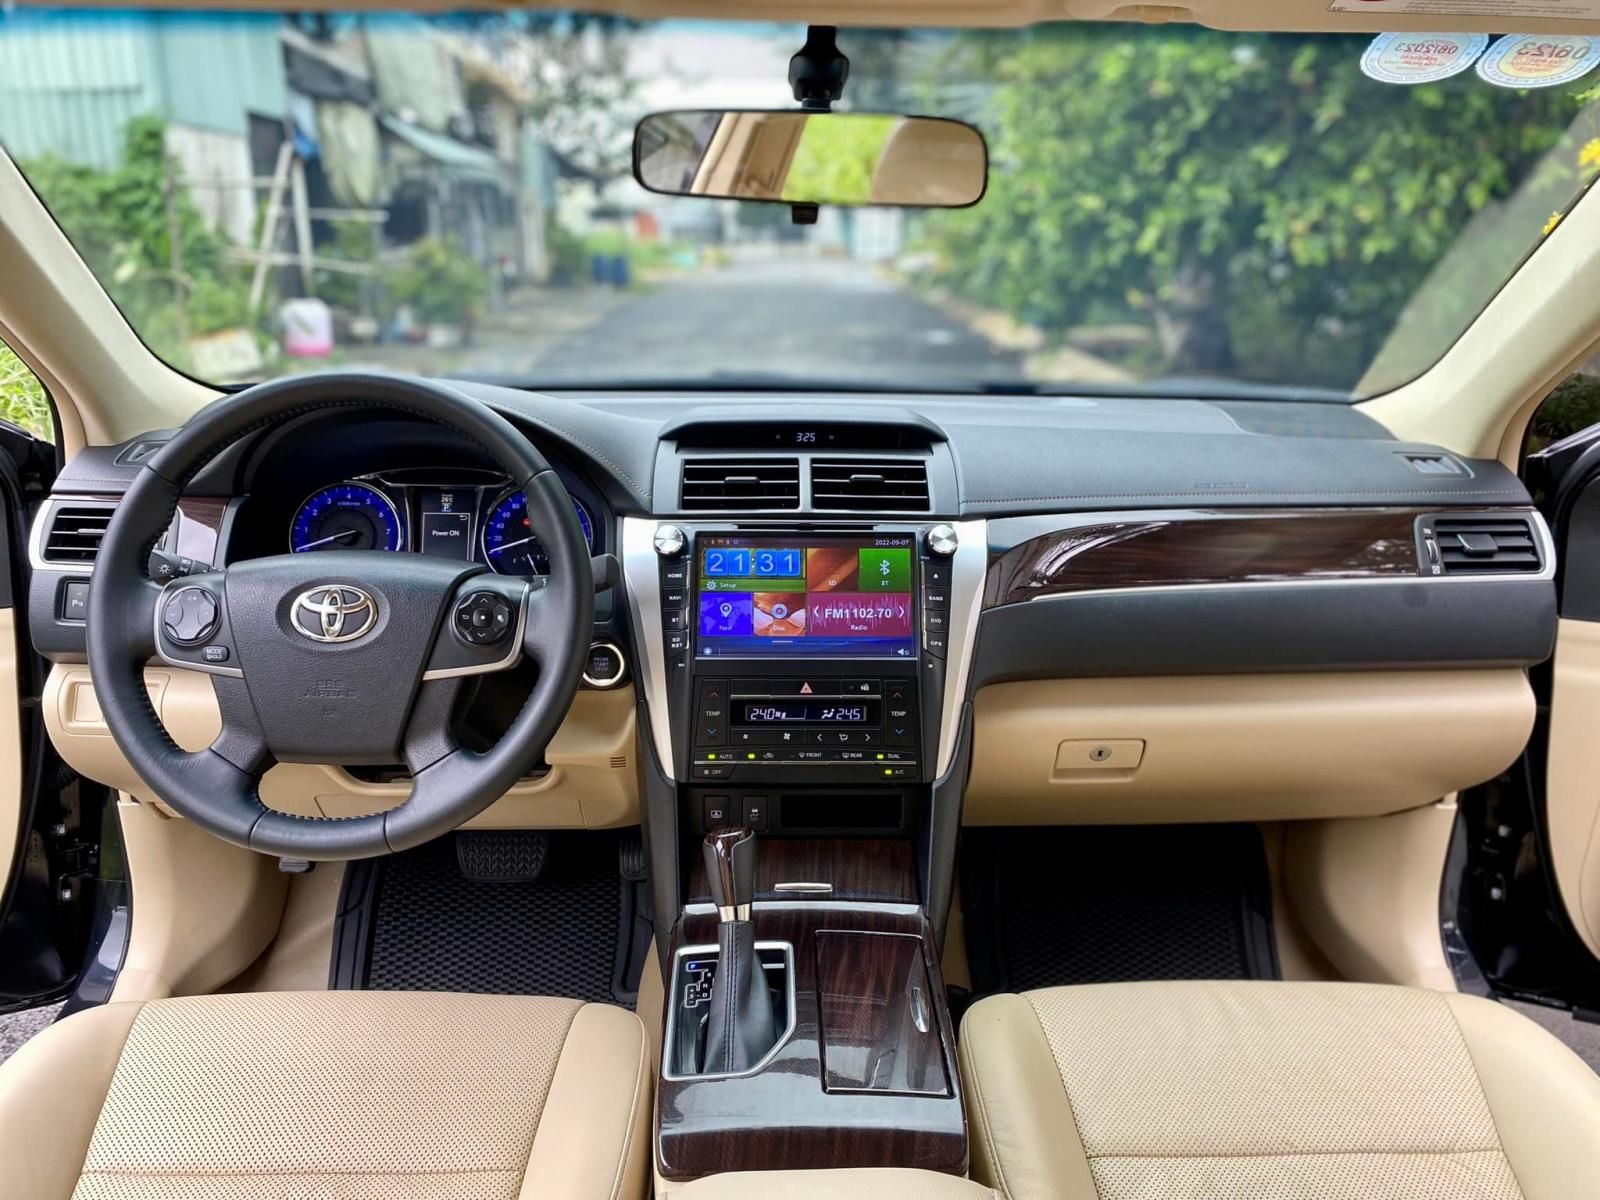 Toyota Camry 2019 - Bao test. Hoàn trả tiền nếu sai